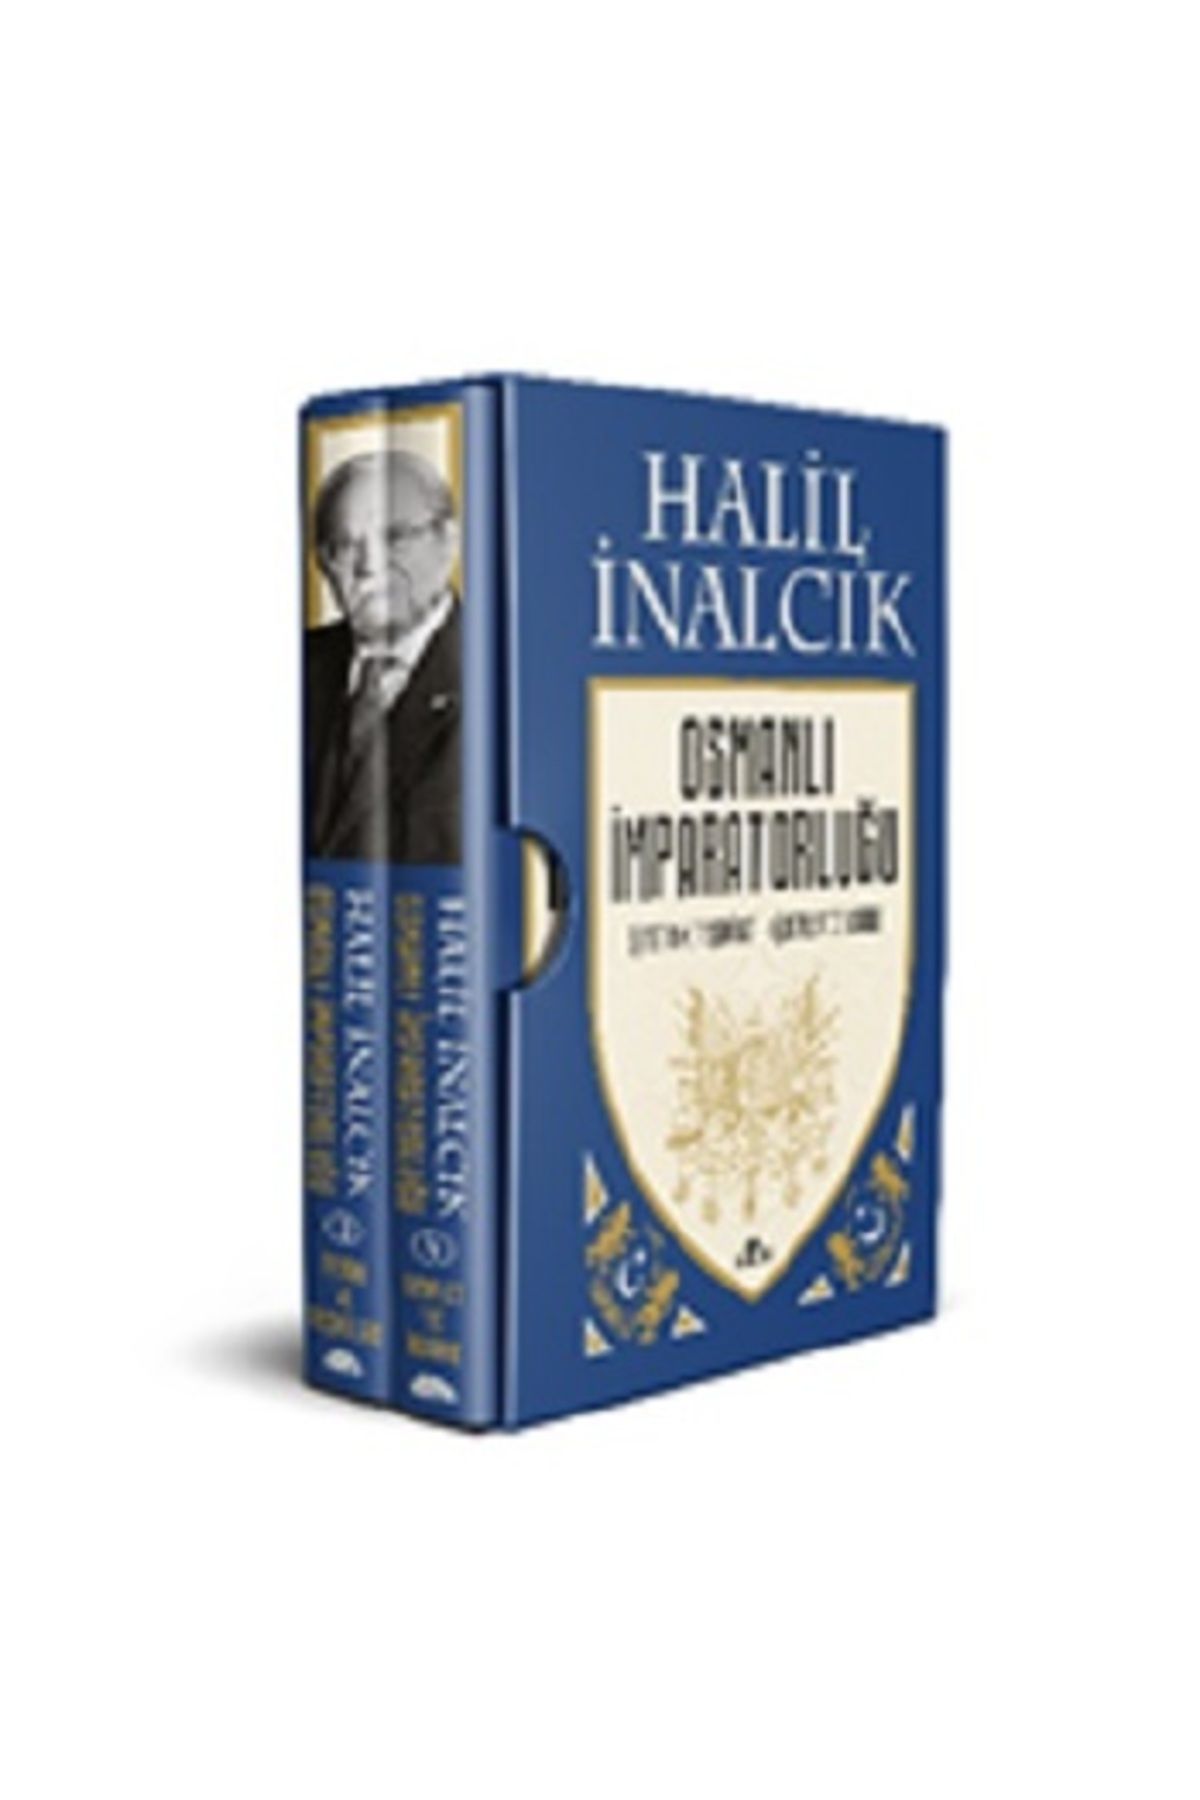 Kronik Kitap Osmanlı İmparatorluğu II (2 Cilt Kutulu) kitabı - Halil İnalcık - Kronik Kitap